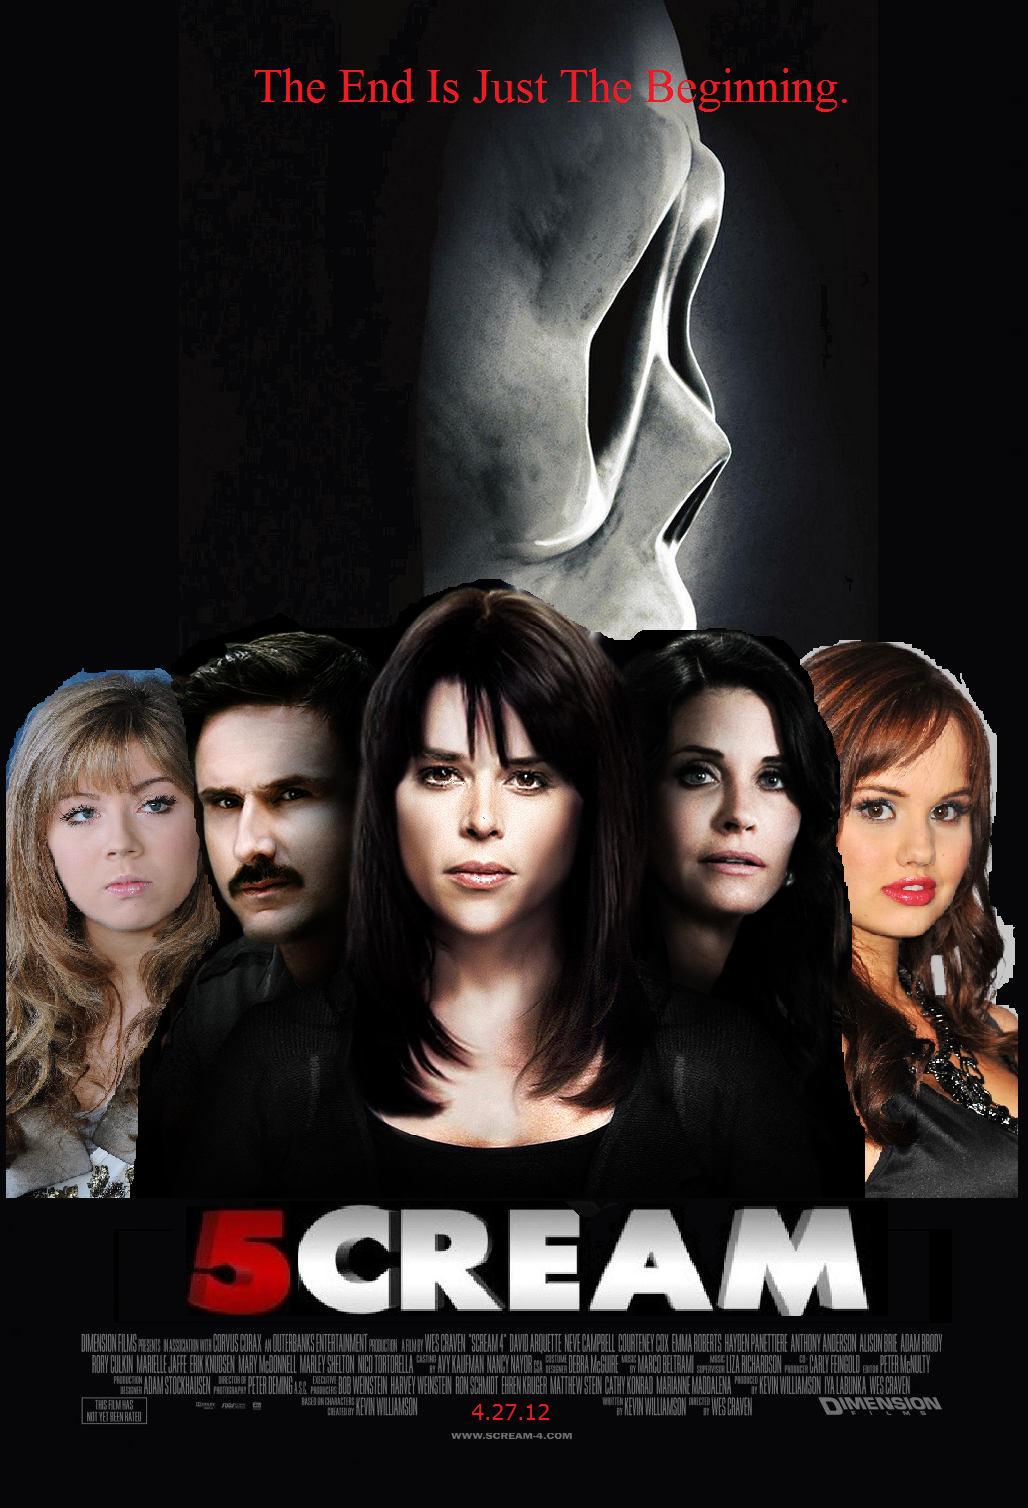 Talk:Scream 5, Ceauntay Gorden's junkplace Wiki